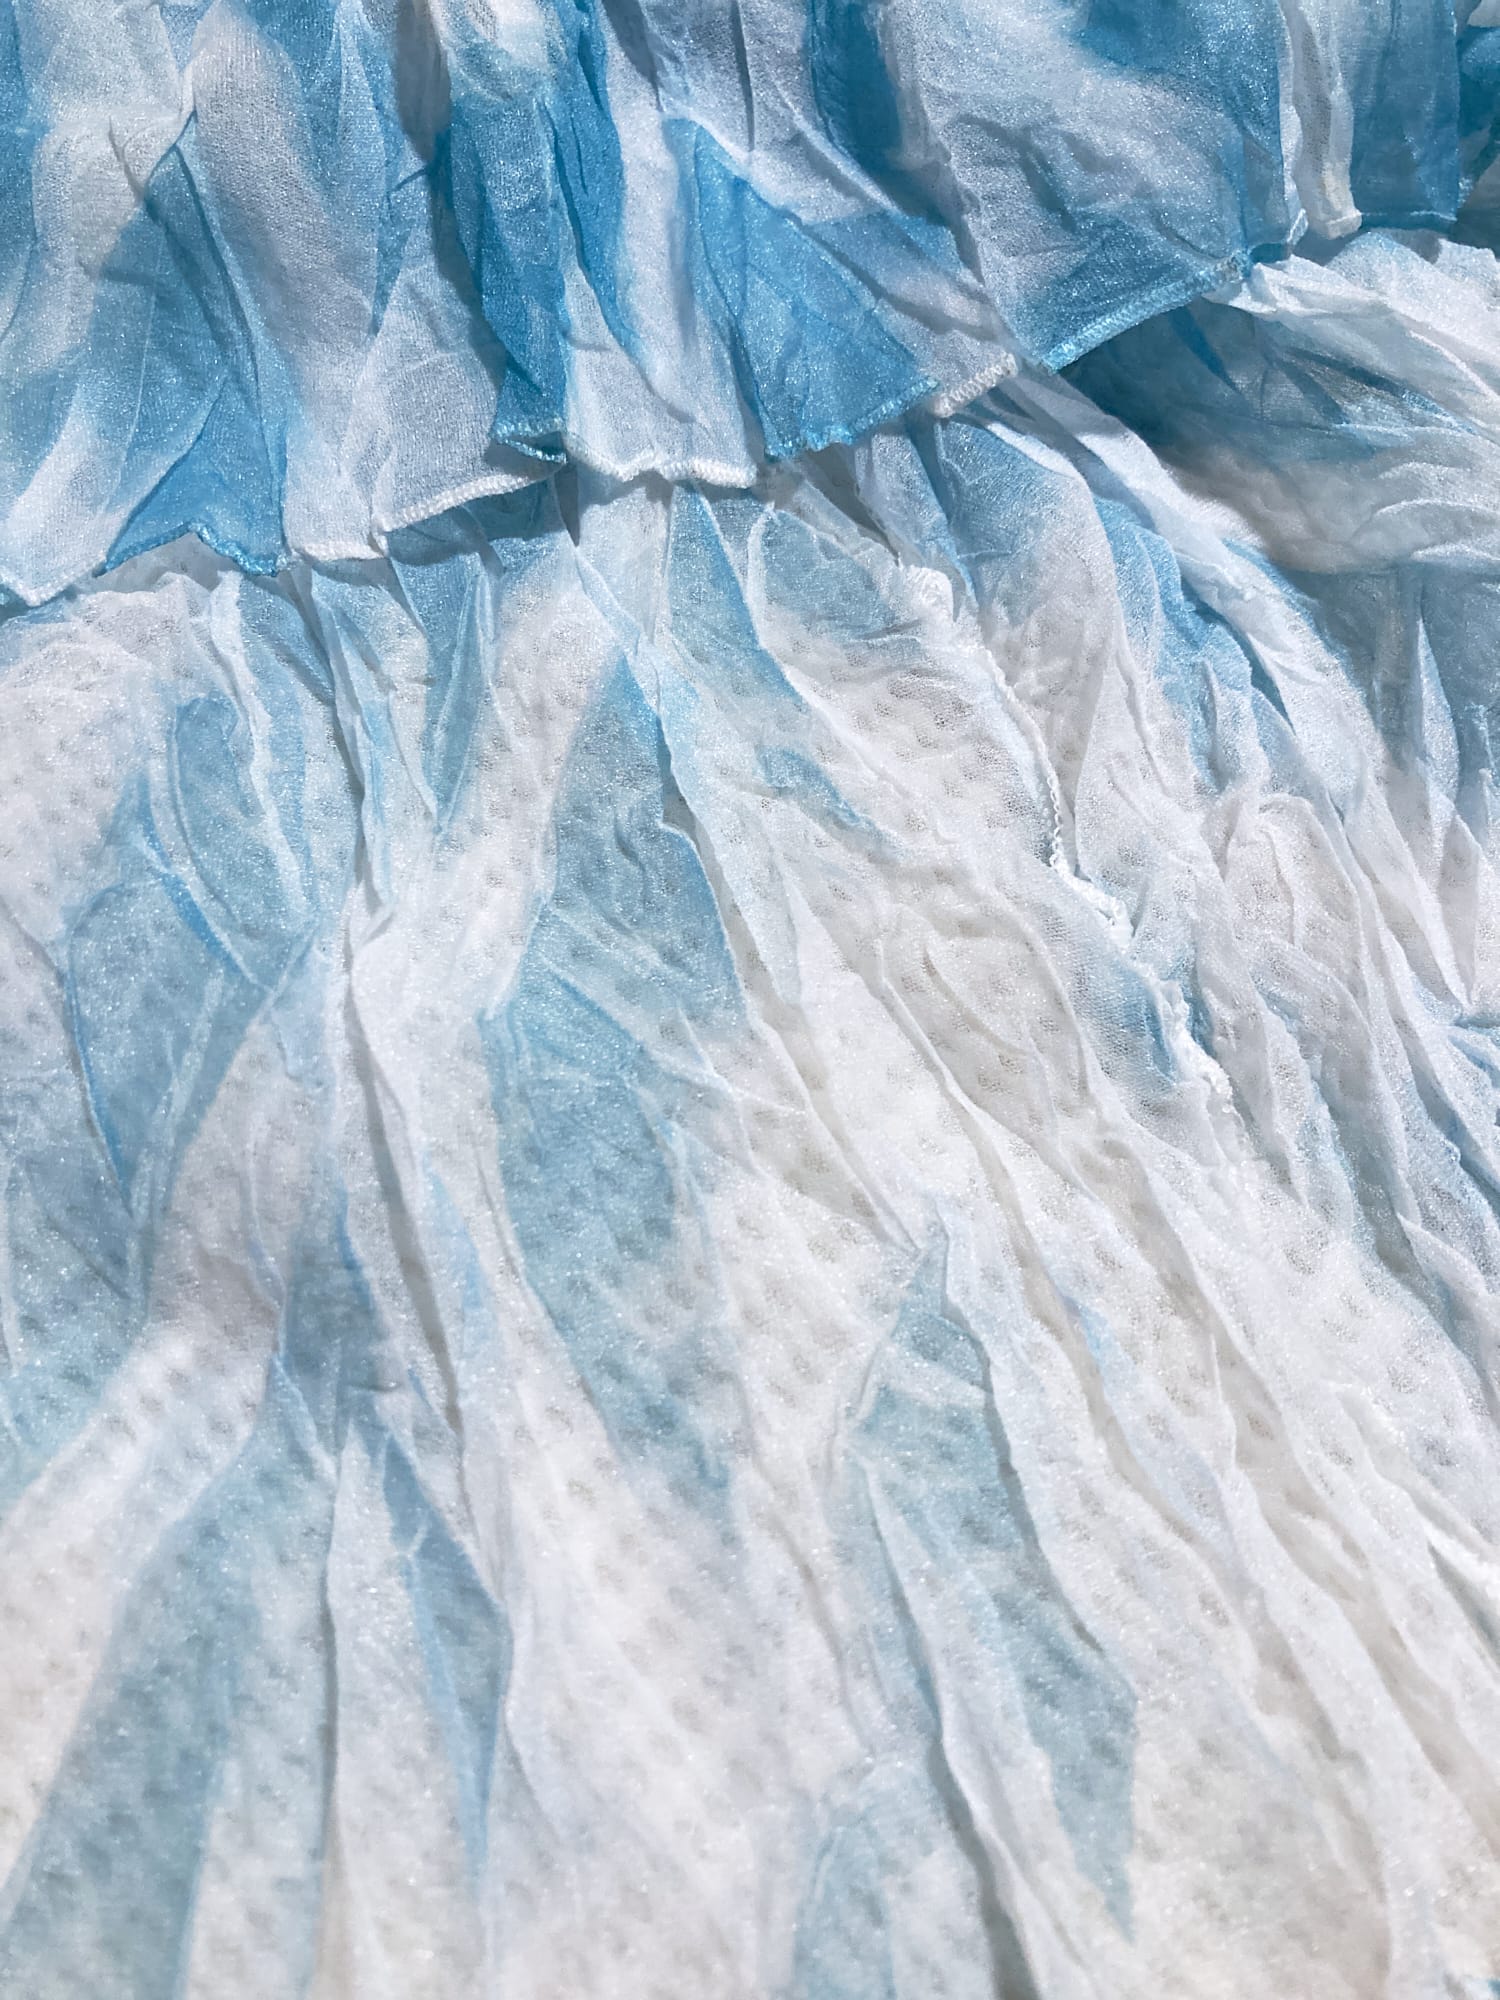 Wrinqle Inoue Pleats sheer blue white wrinkled polyester maxi dress